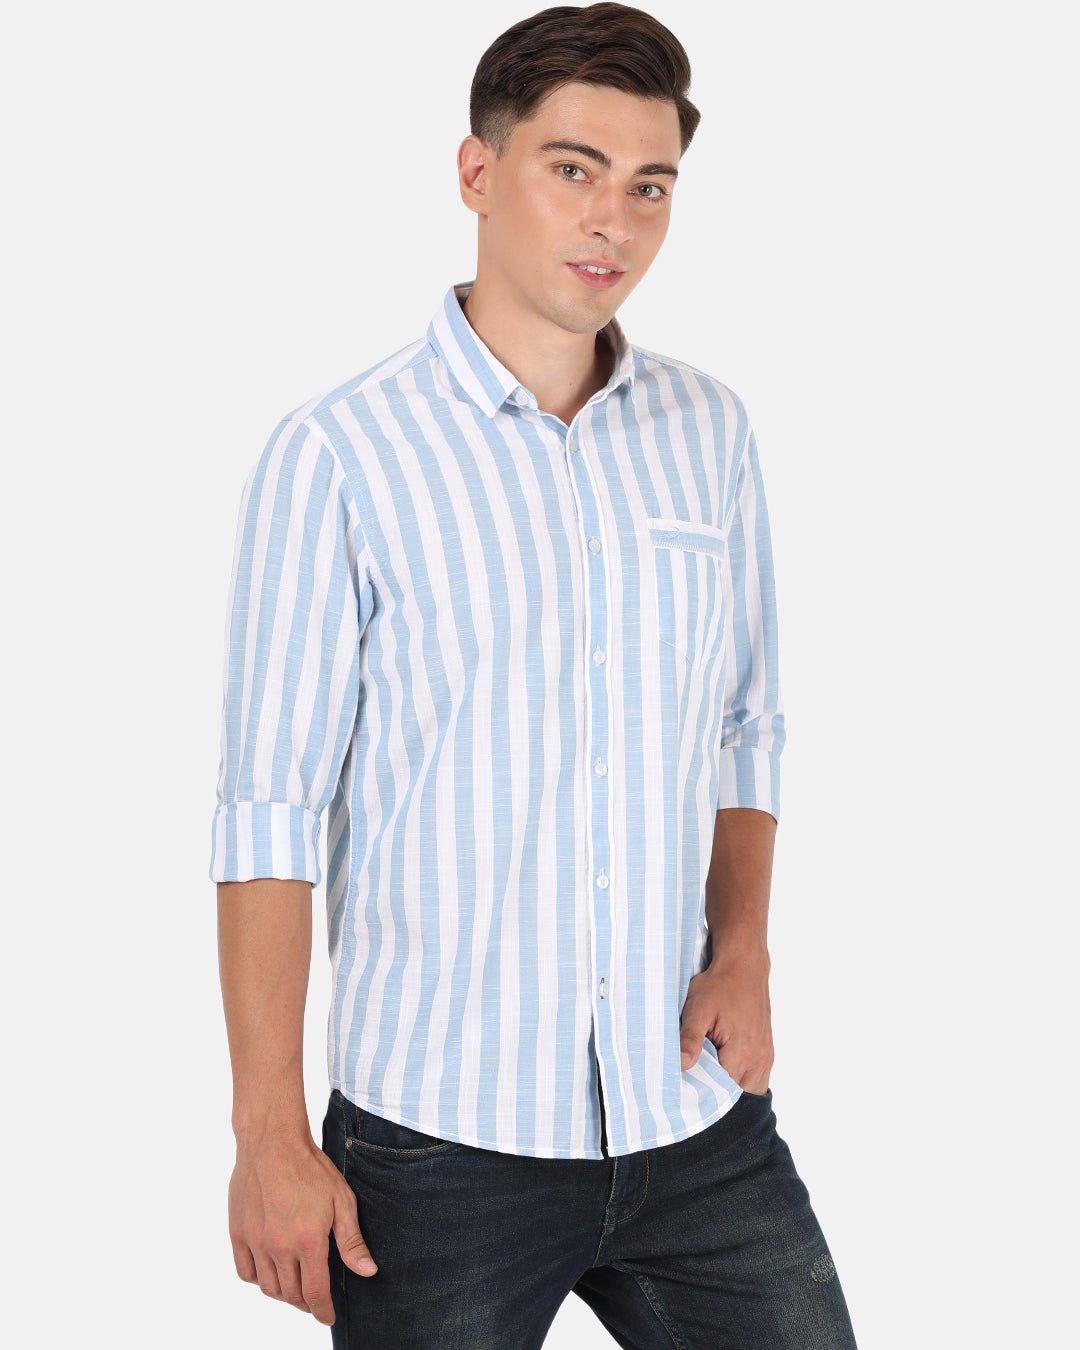 Crocodile Men's Blue Striper Comfort Fit Full Sleeve Shirt